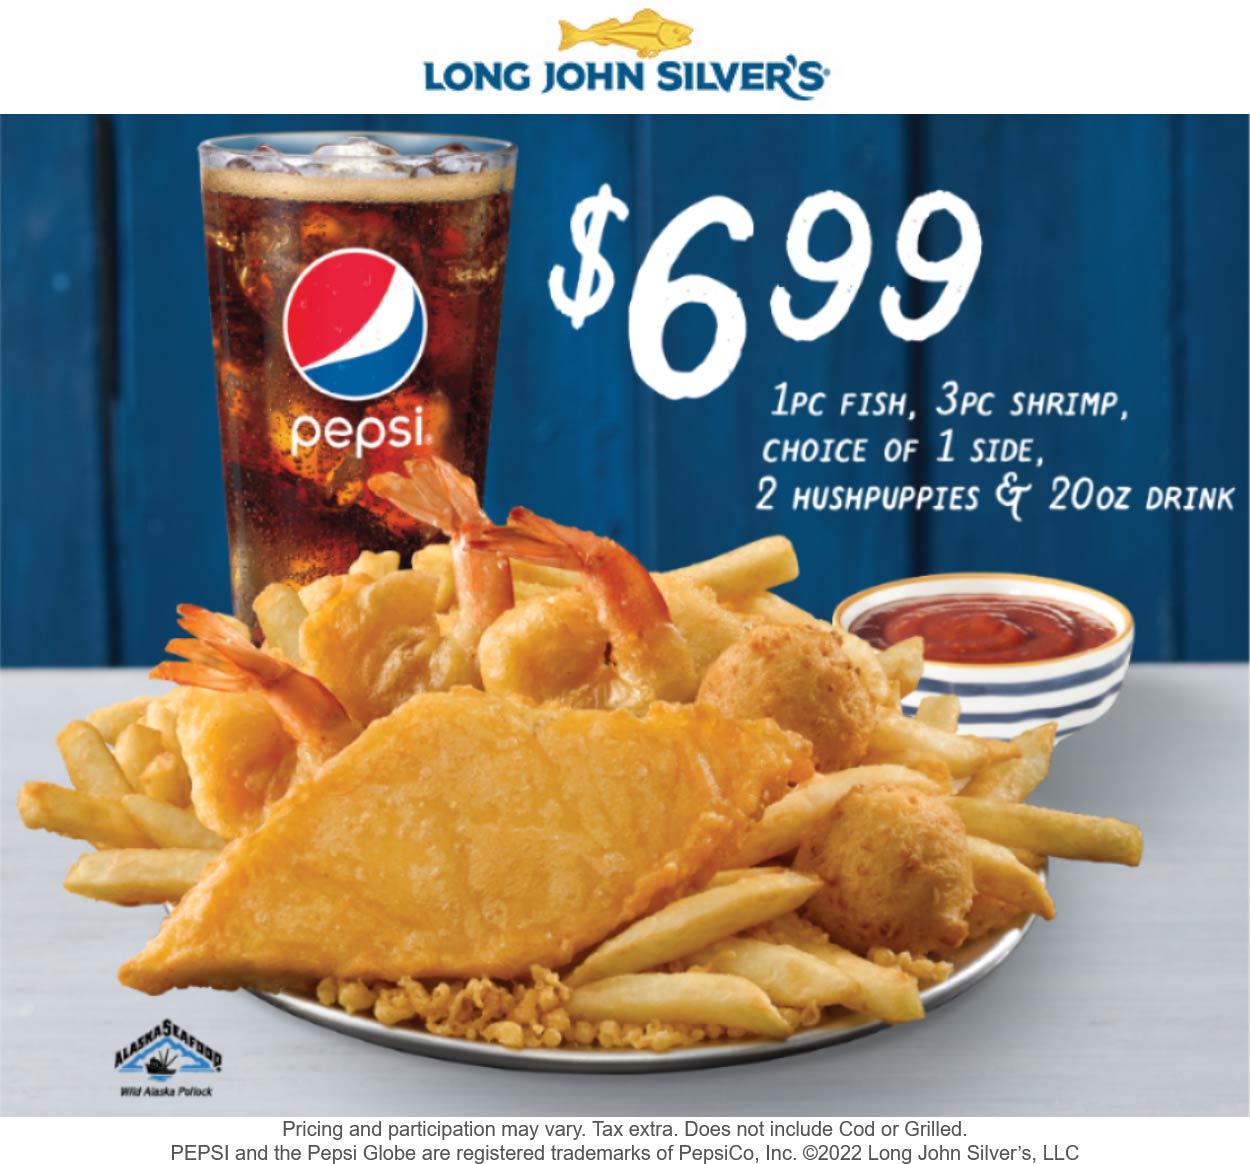 Long John Silvers coupons & promo code for [December 2022]